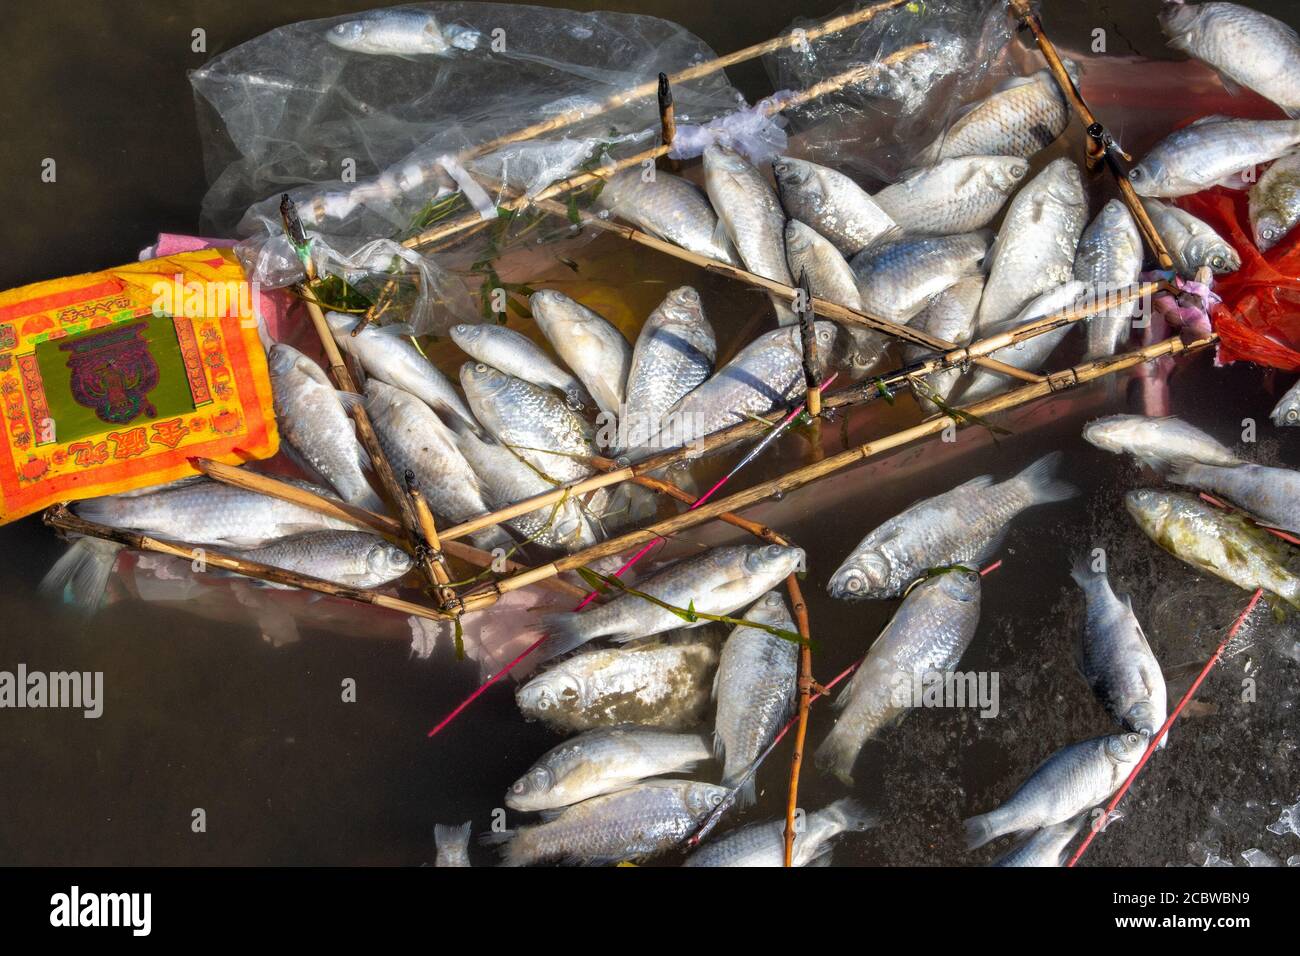 Tianjin / China - February 14, 2016: Dead fish floating in the Hai river (Haihe) in Tianjin, China Stock Photo